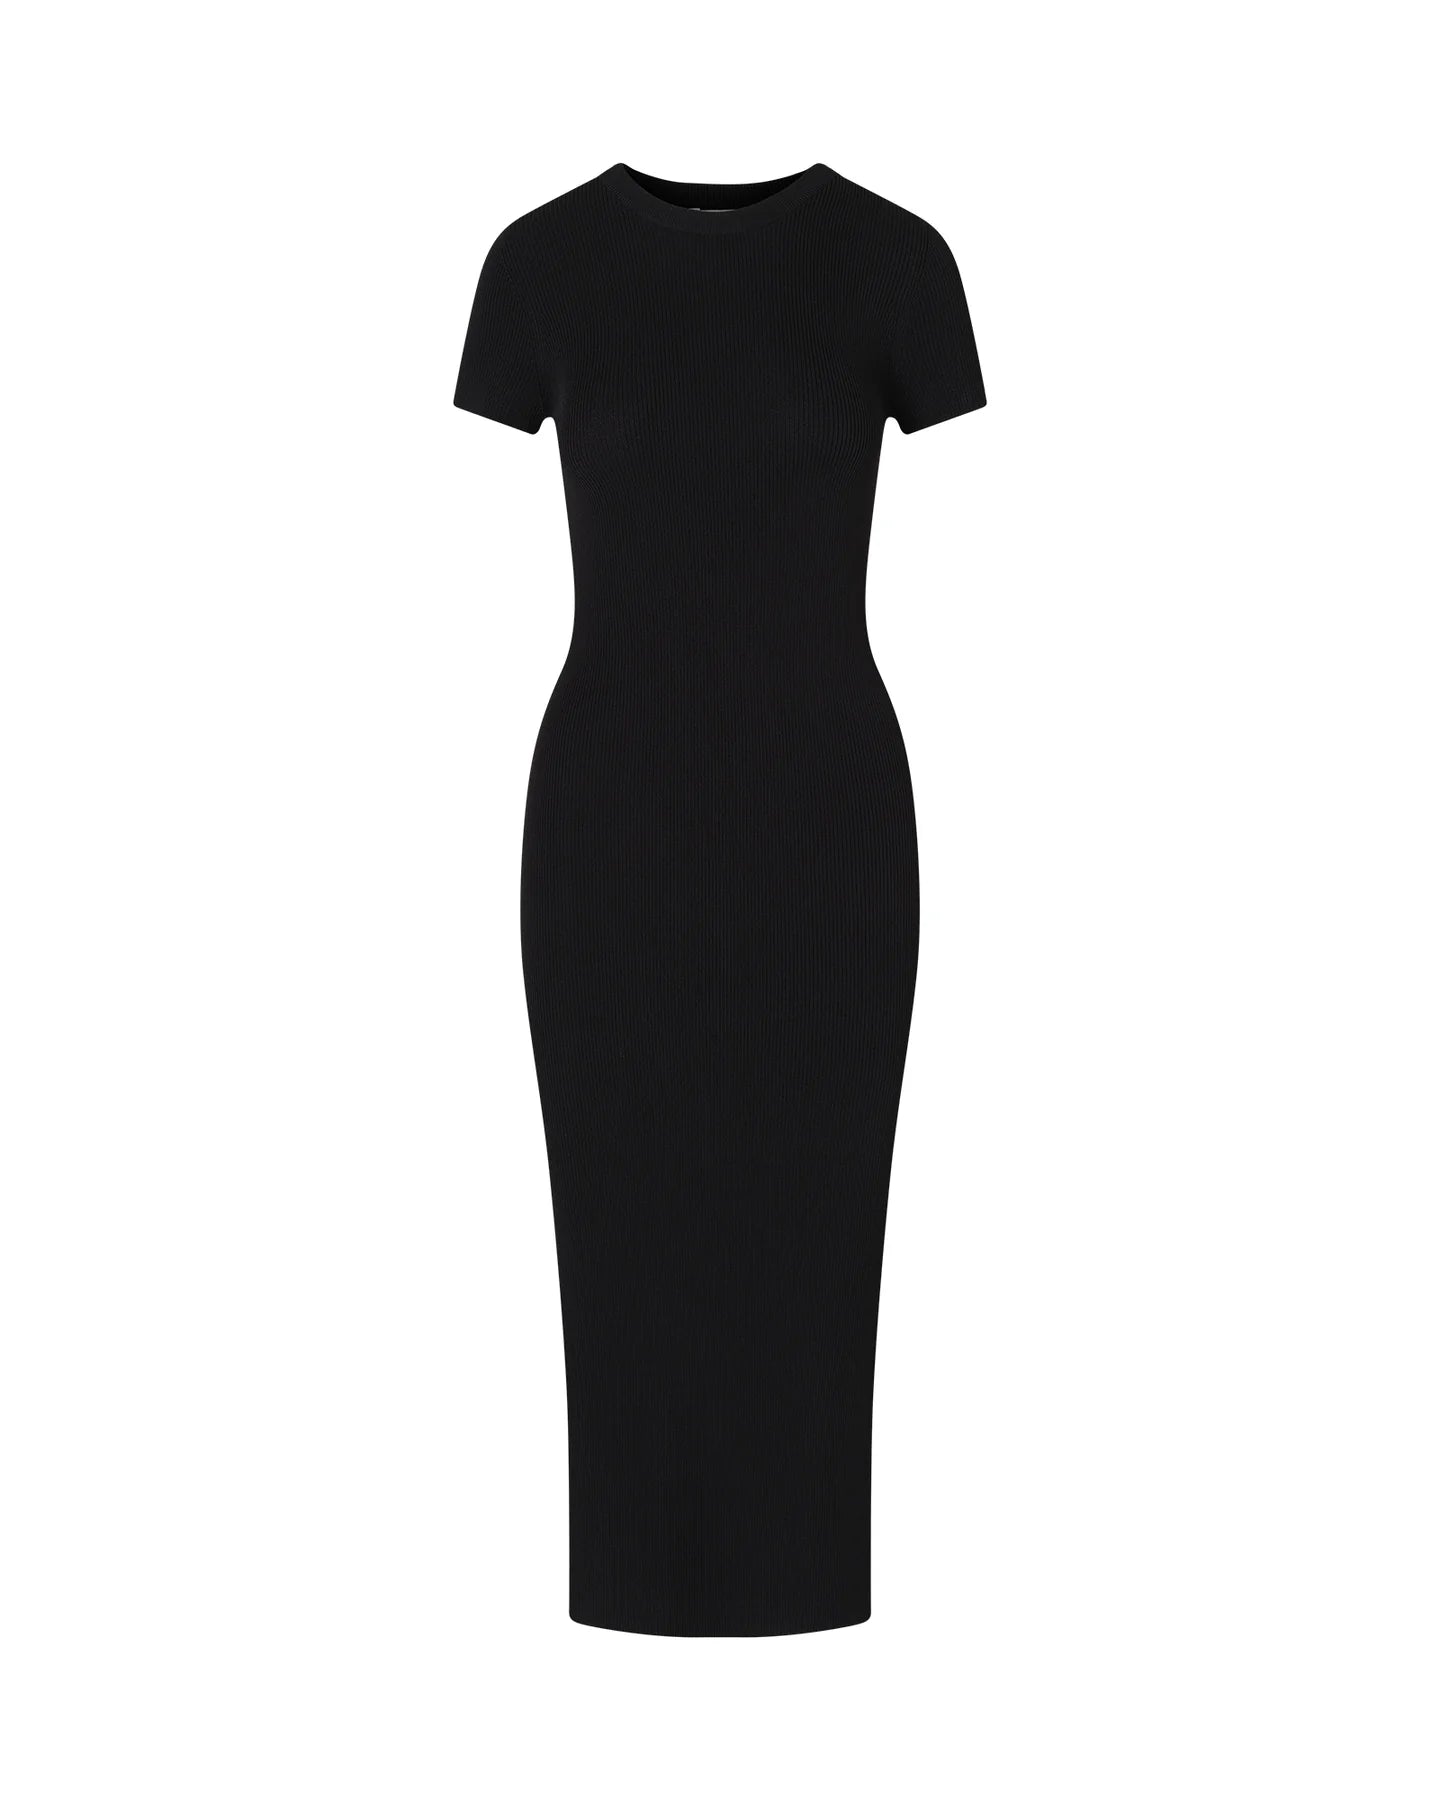 Shop Online I Ellery and Moss I Jack & Mooki Camilla Knit Dress - Black